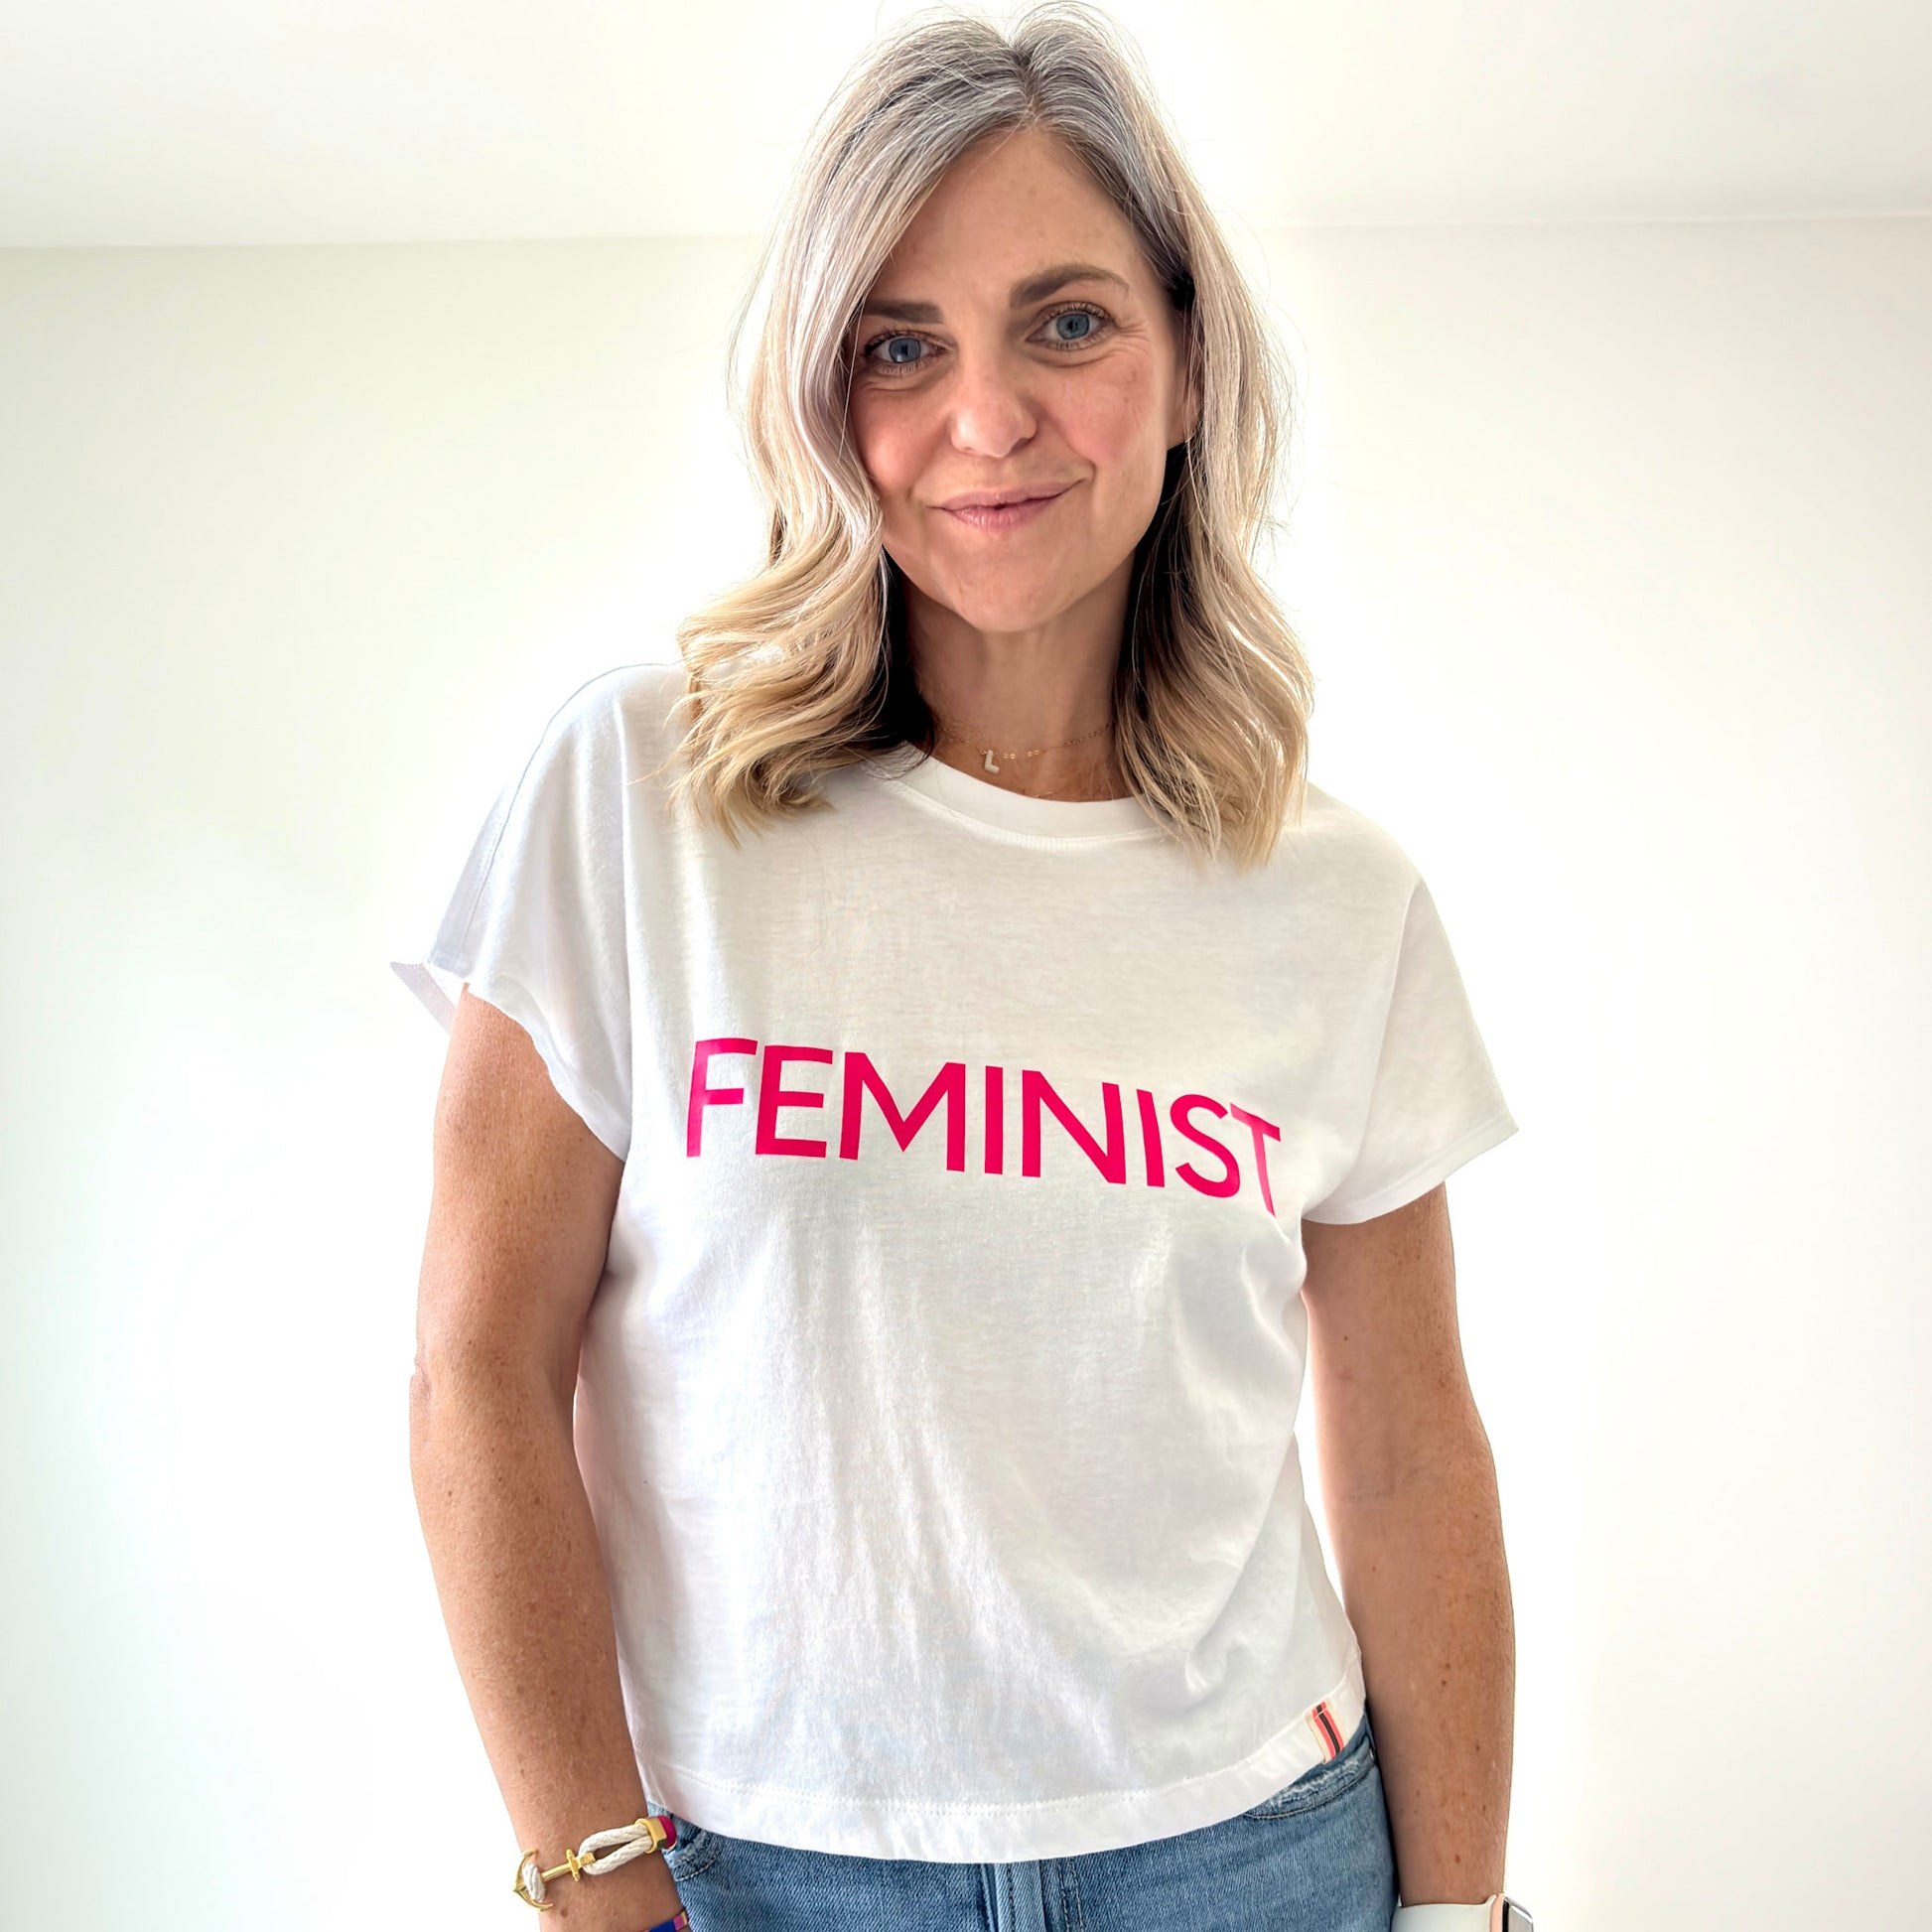 women's white short sleeve t shirt with neon pink feminist print